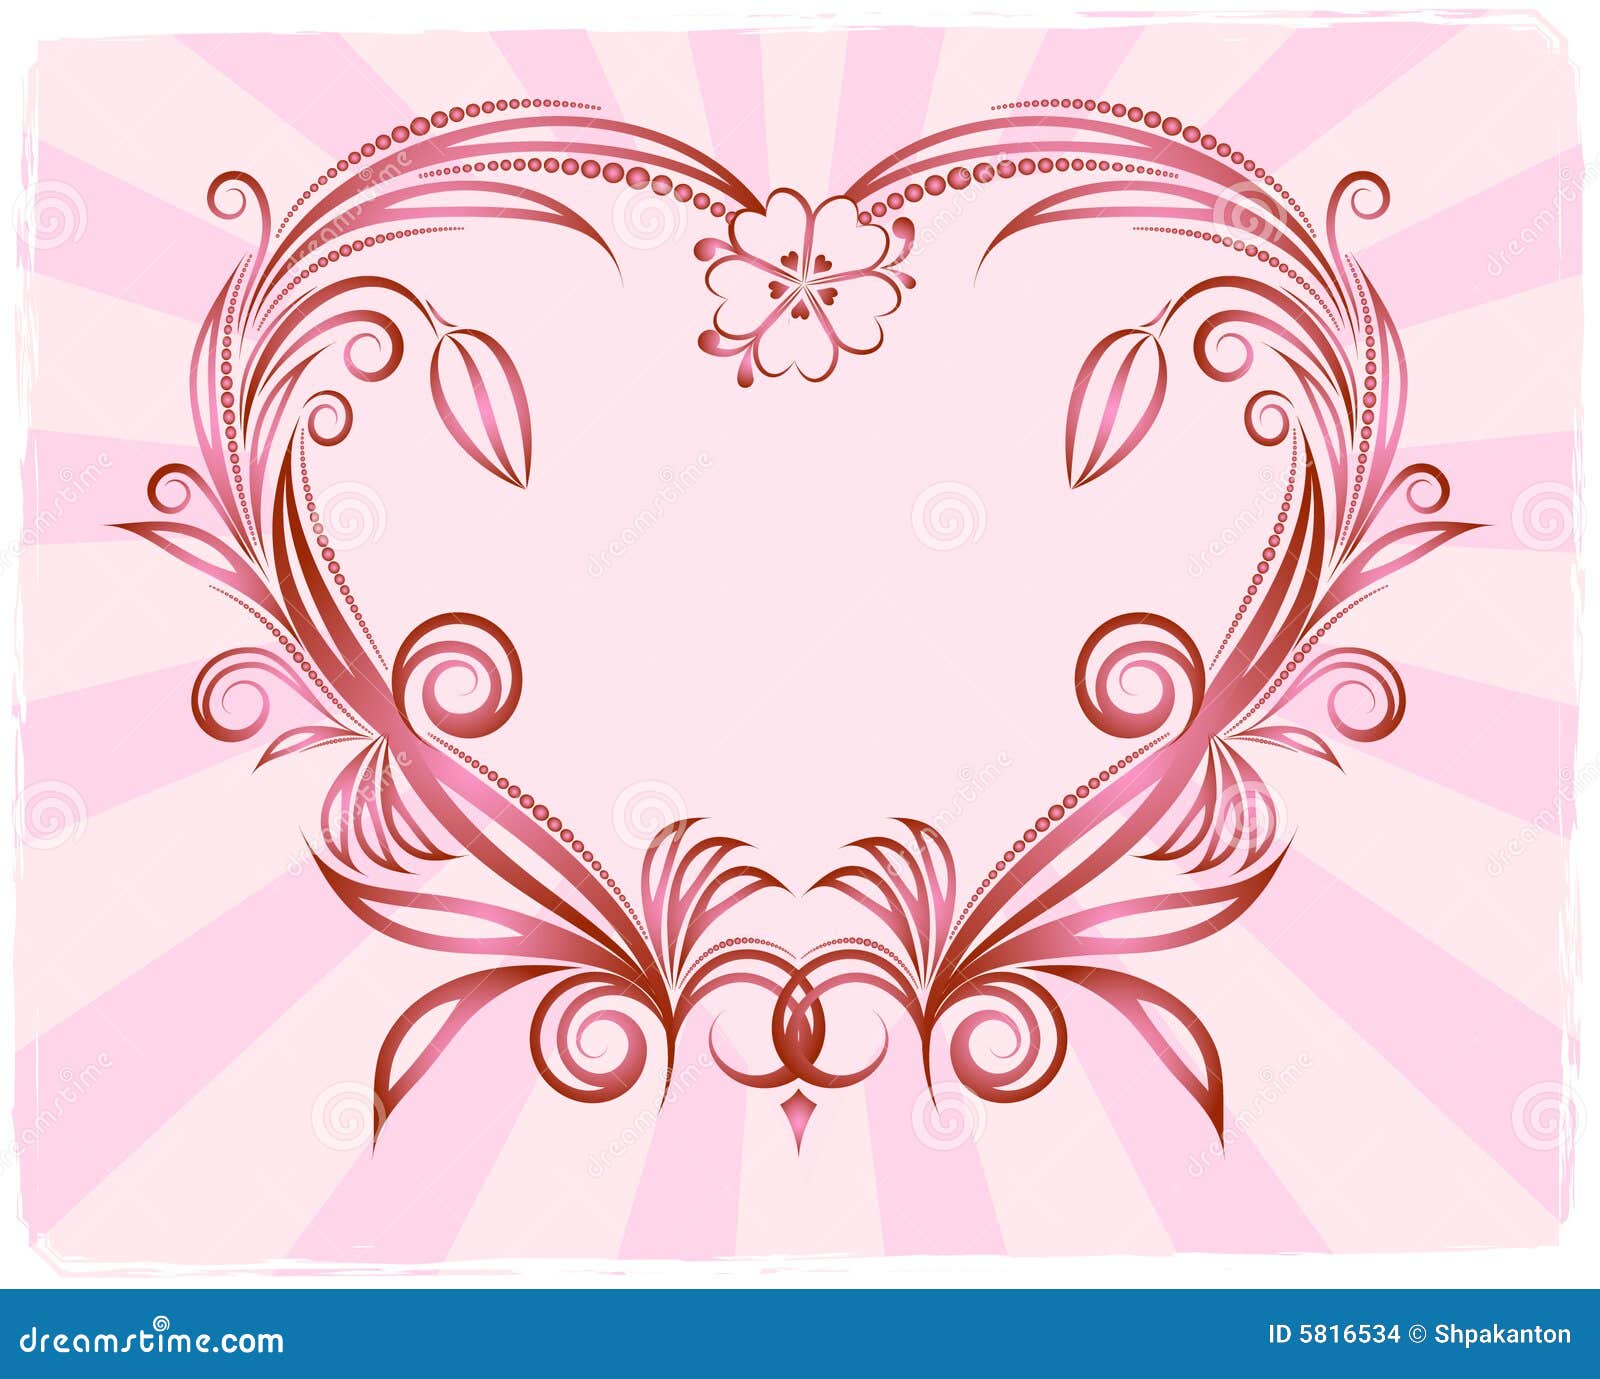 Heart s background. stock illustration. Illustration of design - 5816534